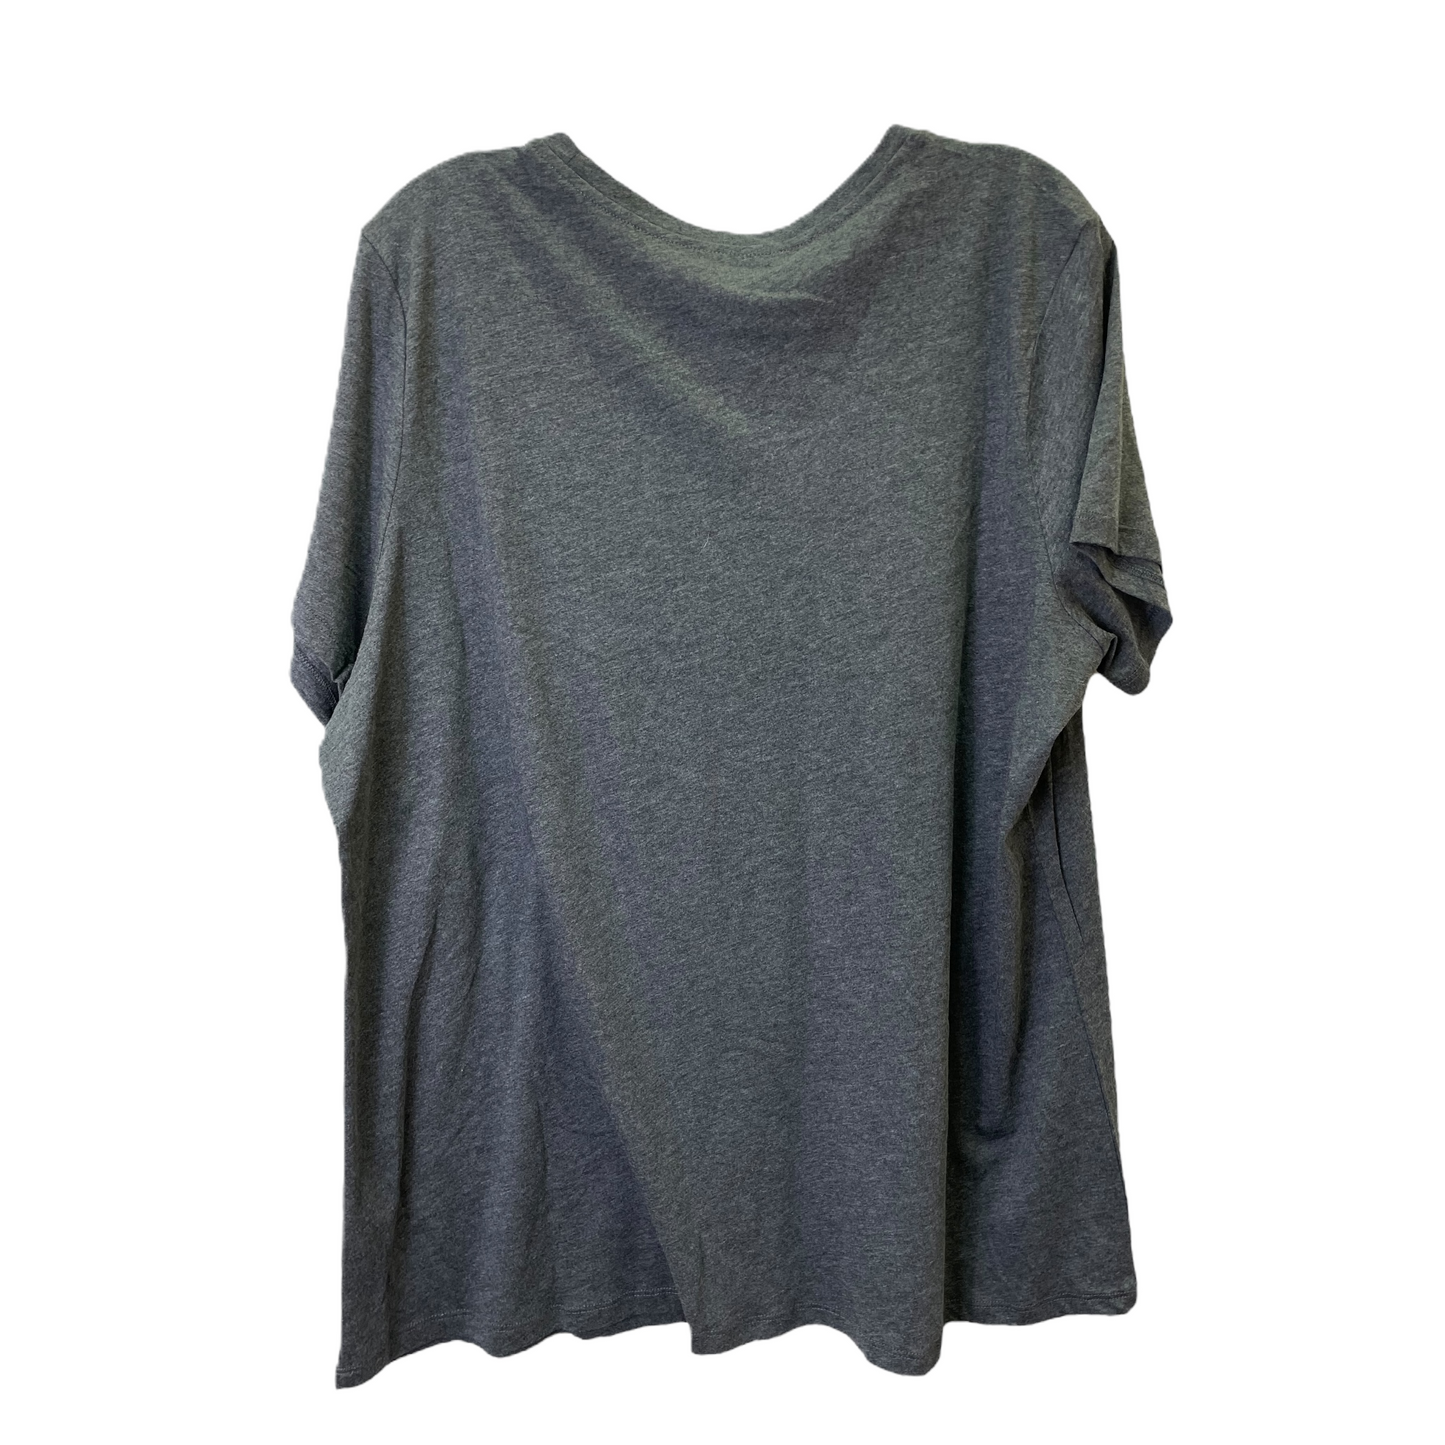 Grey Top Short Sleeve By Torrid, Size: 2x